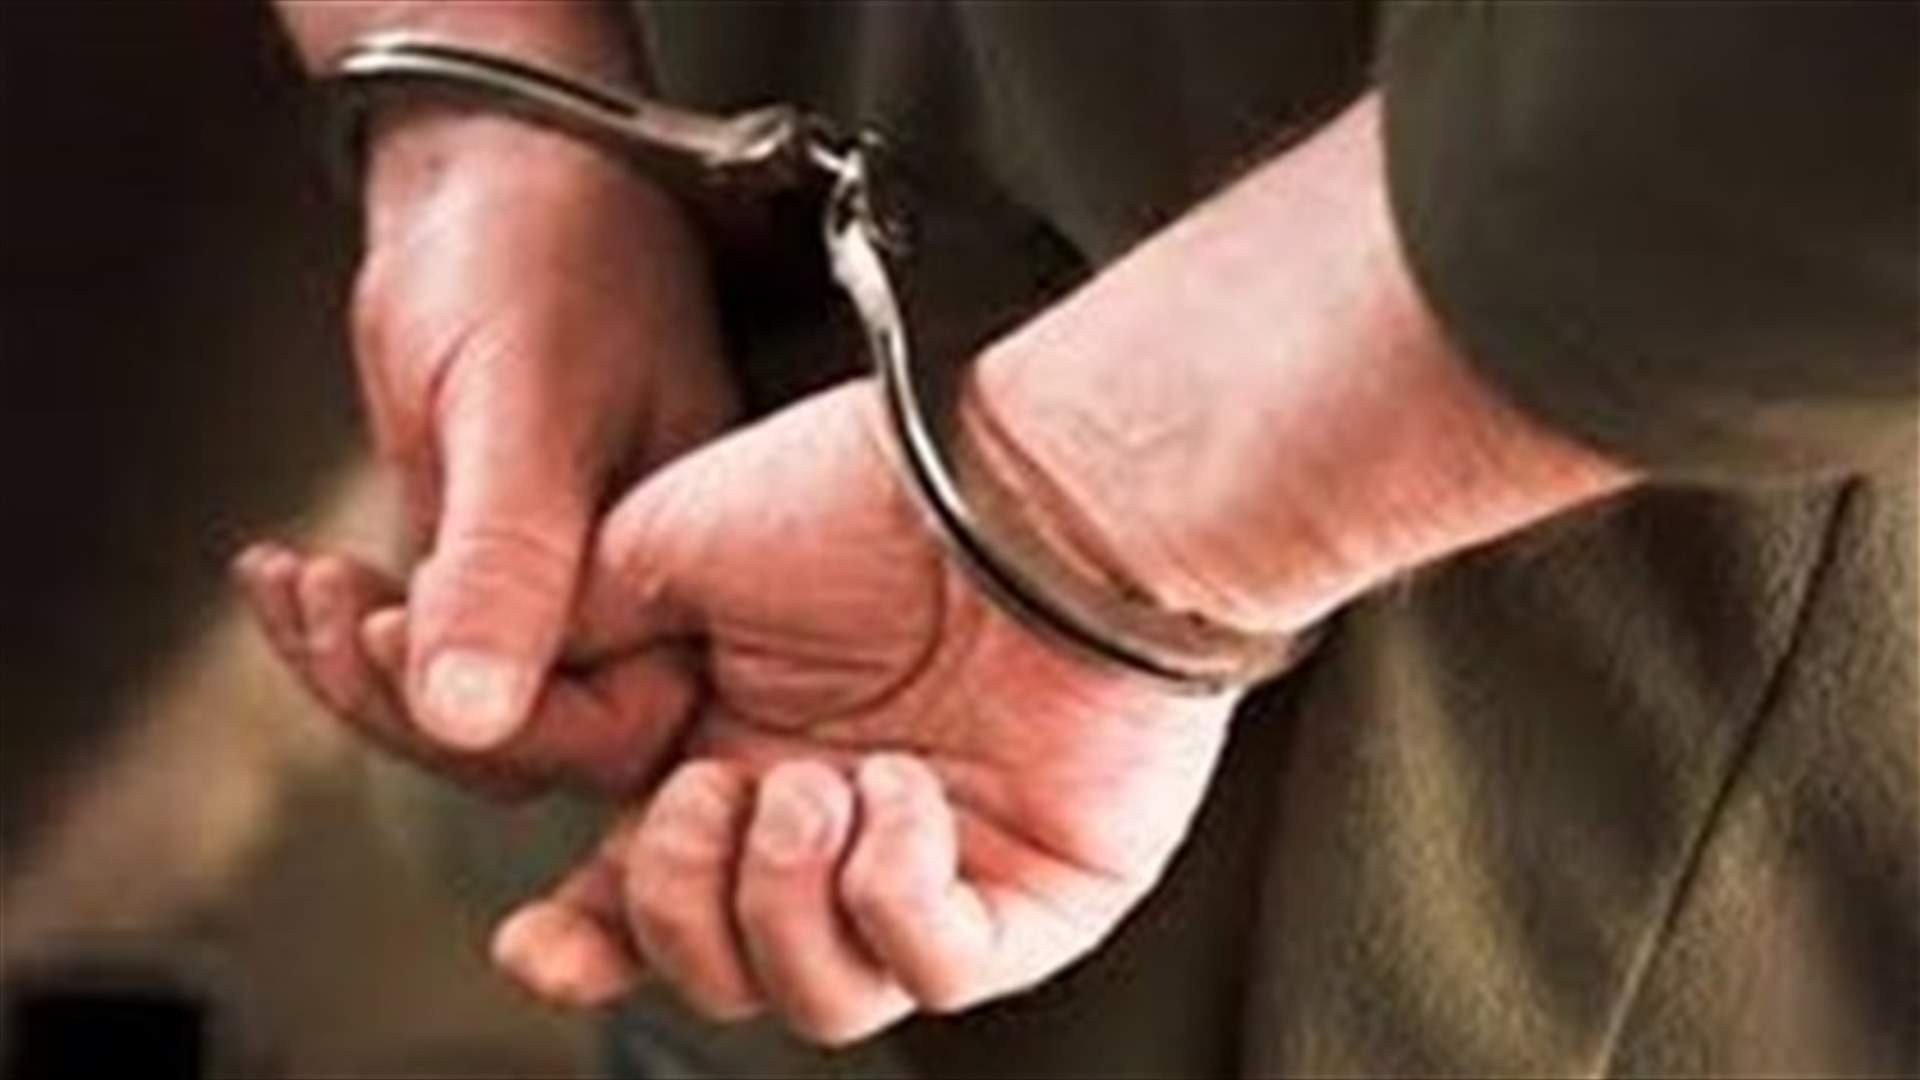 International Anti-Theft Bureau arrests citizen wanted on 125 warrants